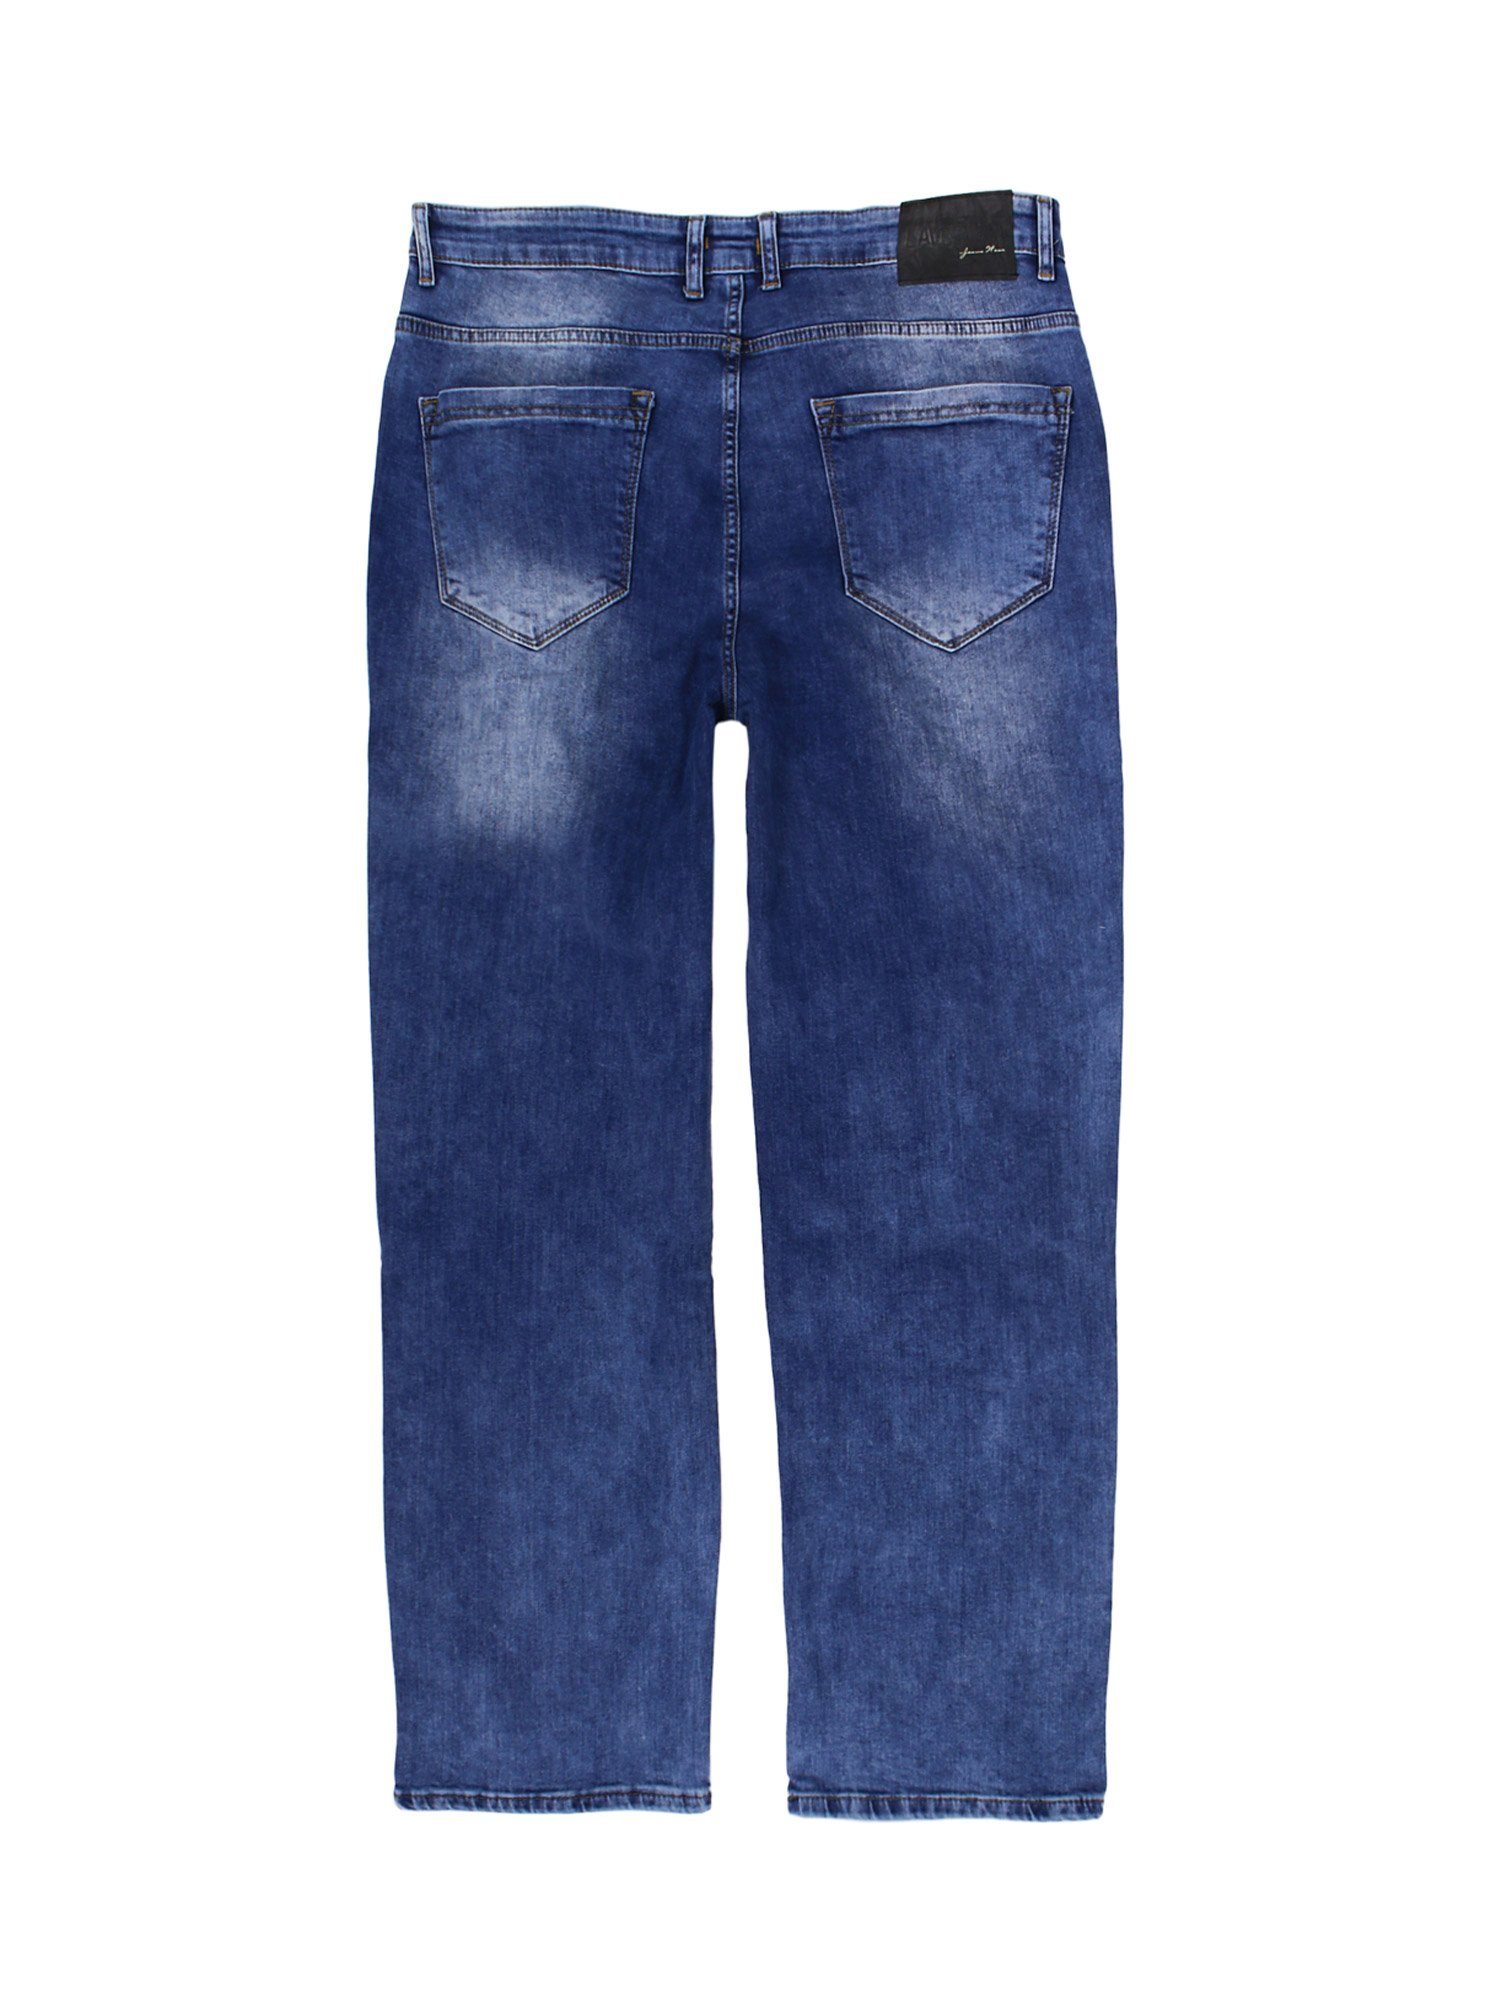 Lavecchia Comfort-fit-Jeans Jeanshose Übergrößen mit stoneblau LV-501 Stretch Herren Elasthan